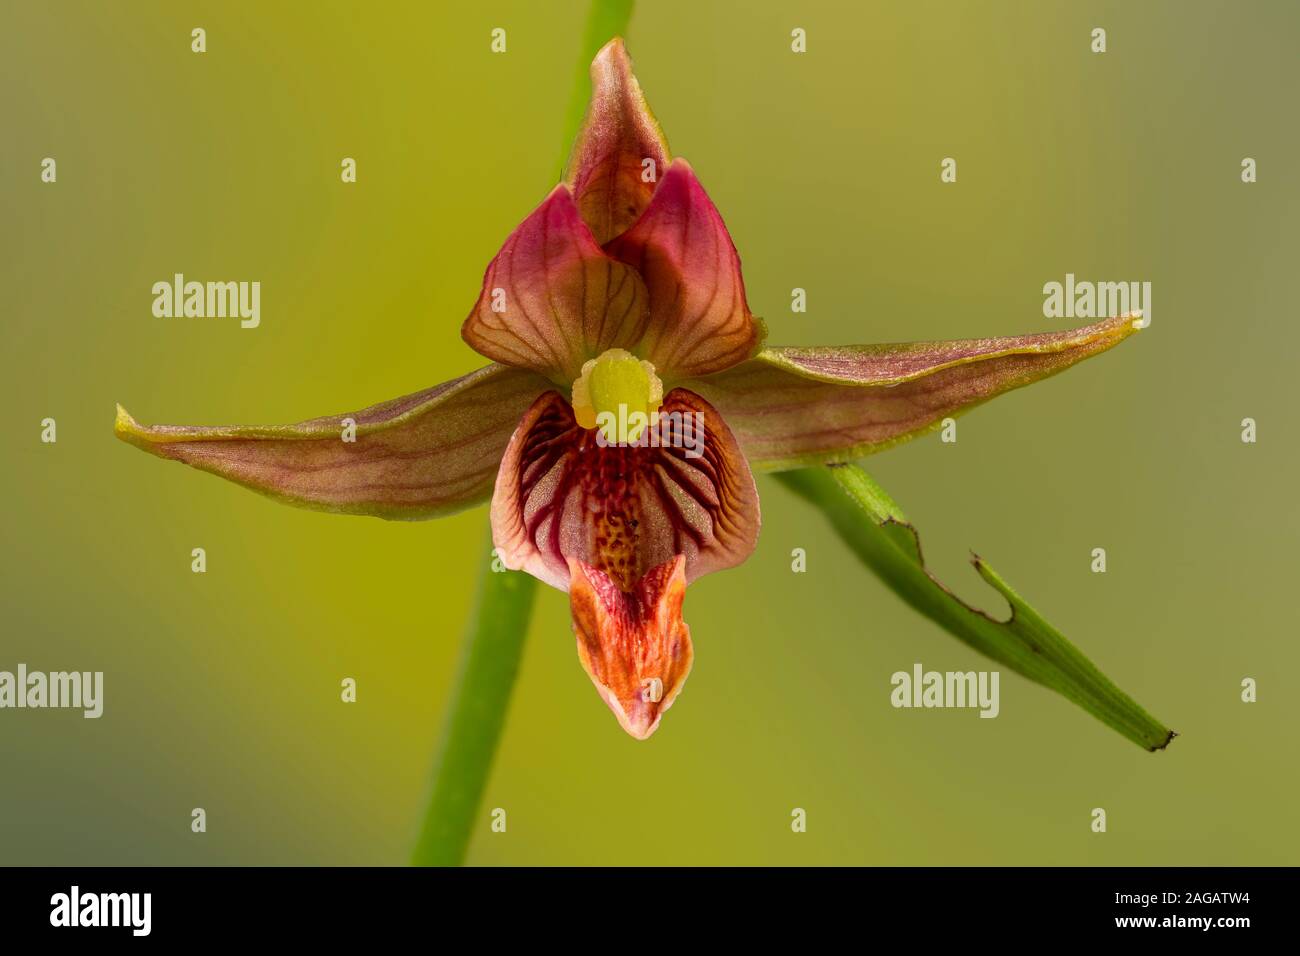 Yellow-orange Garden Orchid, or Giant Helleborine, Epipactis gigantea, in cultivation Stock Photo